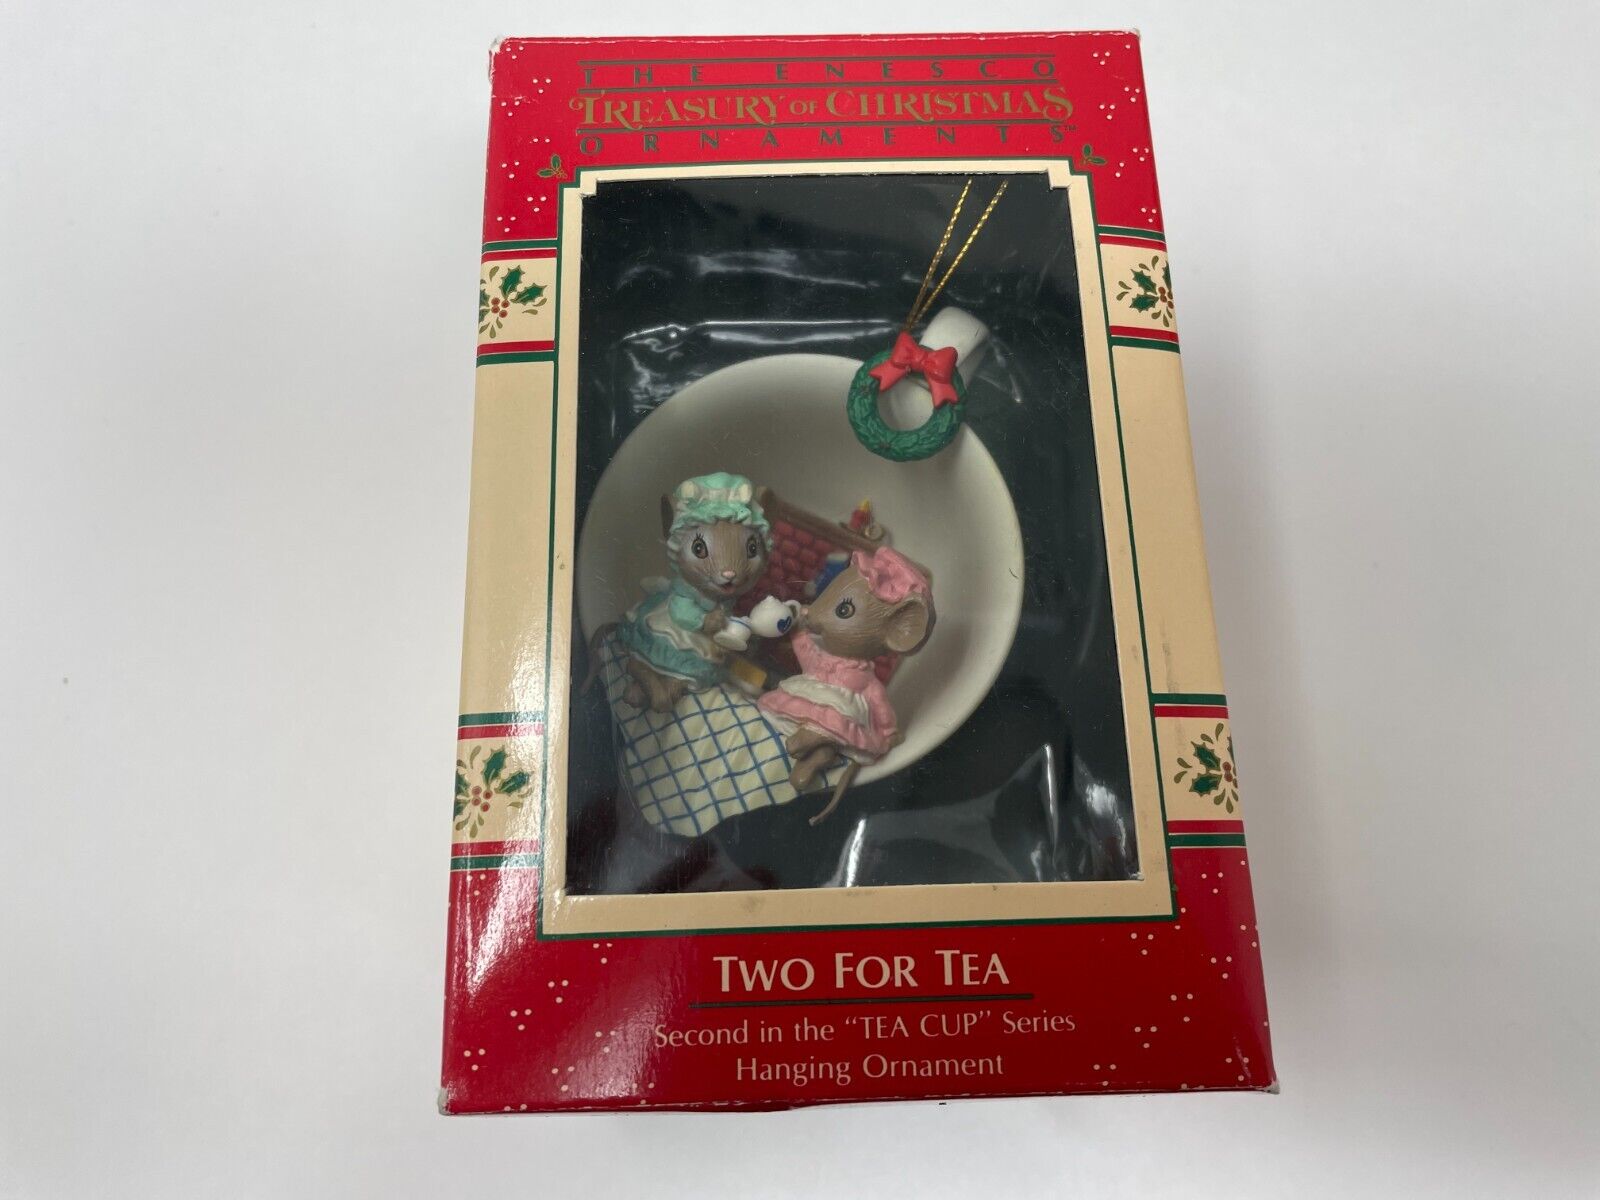 Enesco Vintage 1988 Two For Tea Treasury of Christmas Collectible Ornament